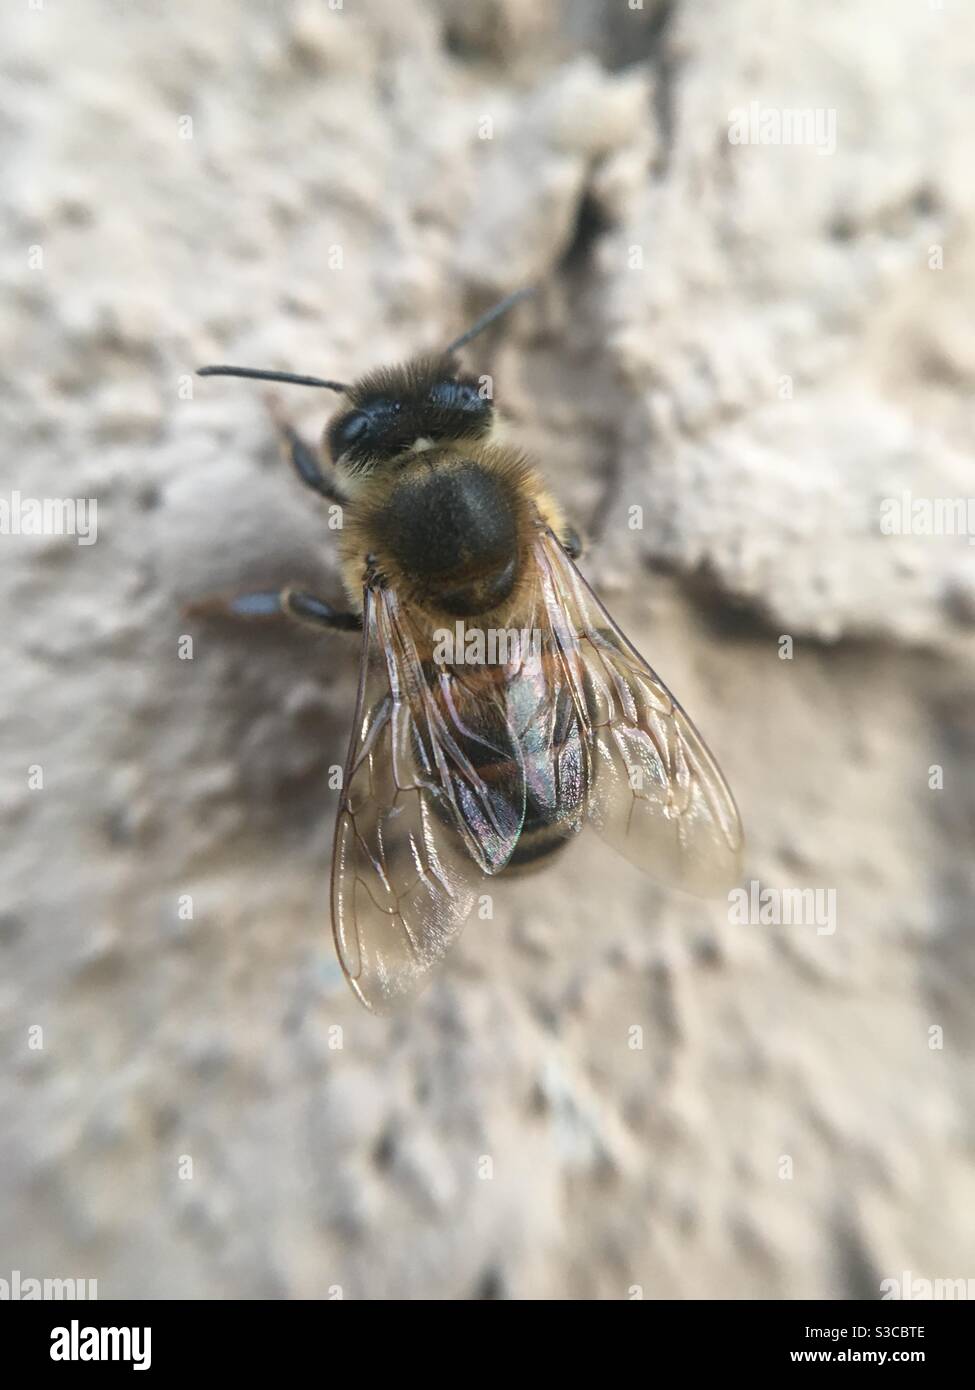 Macro of a Honeybee on a stucco wall Stock Photo